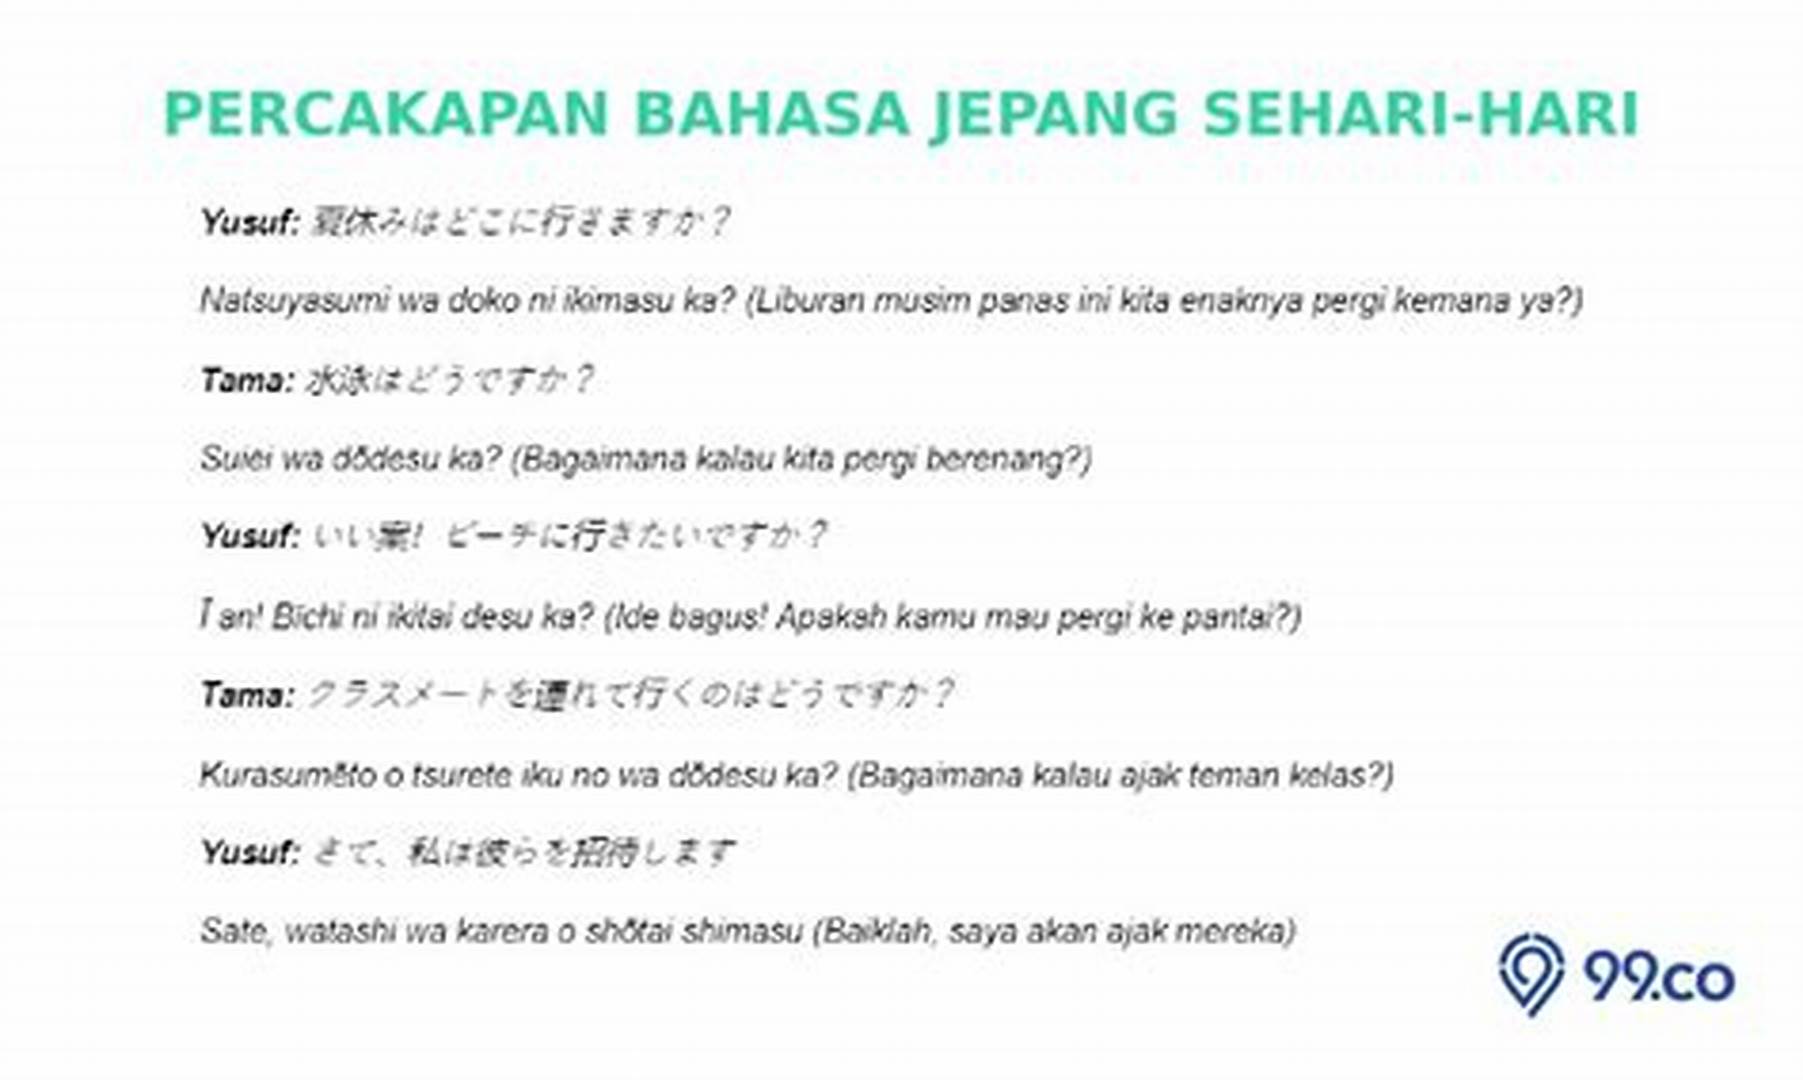 Contoh percakapan sehari-hari dalam bahasa Jepang